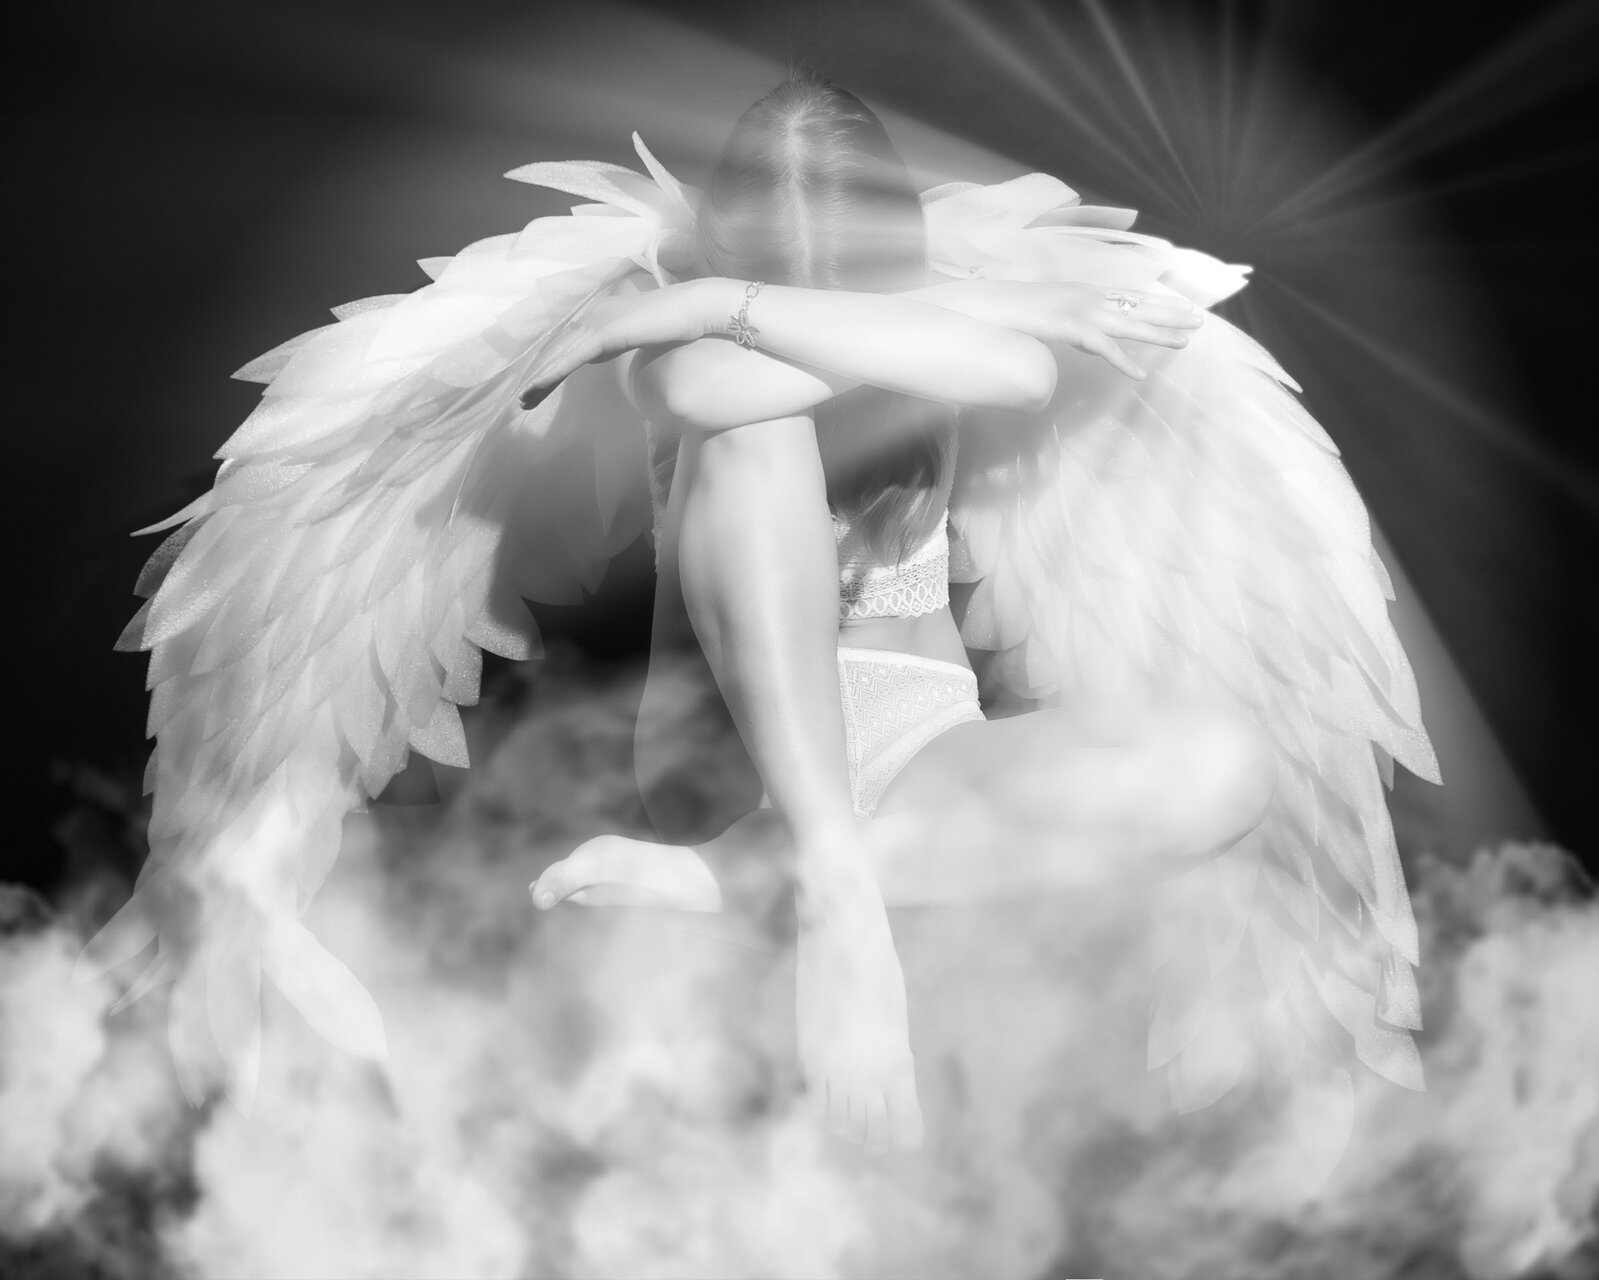 fallen angel | Author Chavdar Arsov - Paqk | PHOTO FORUM